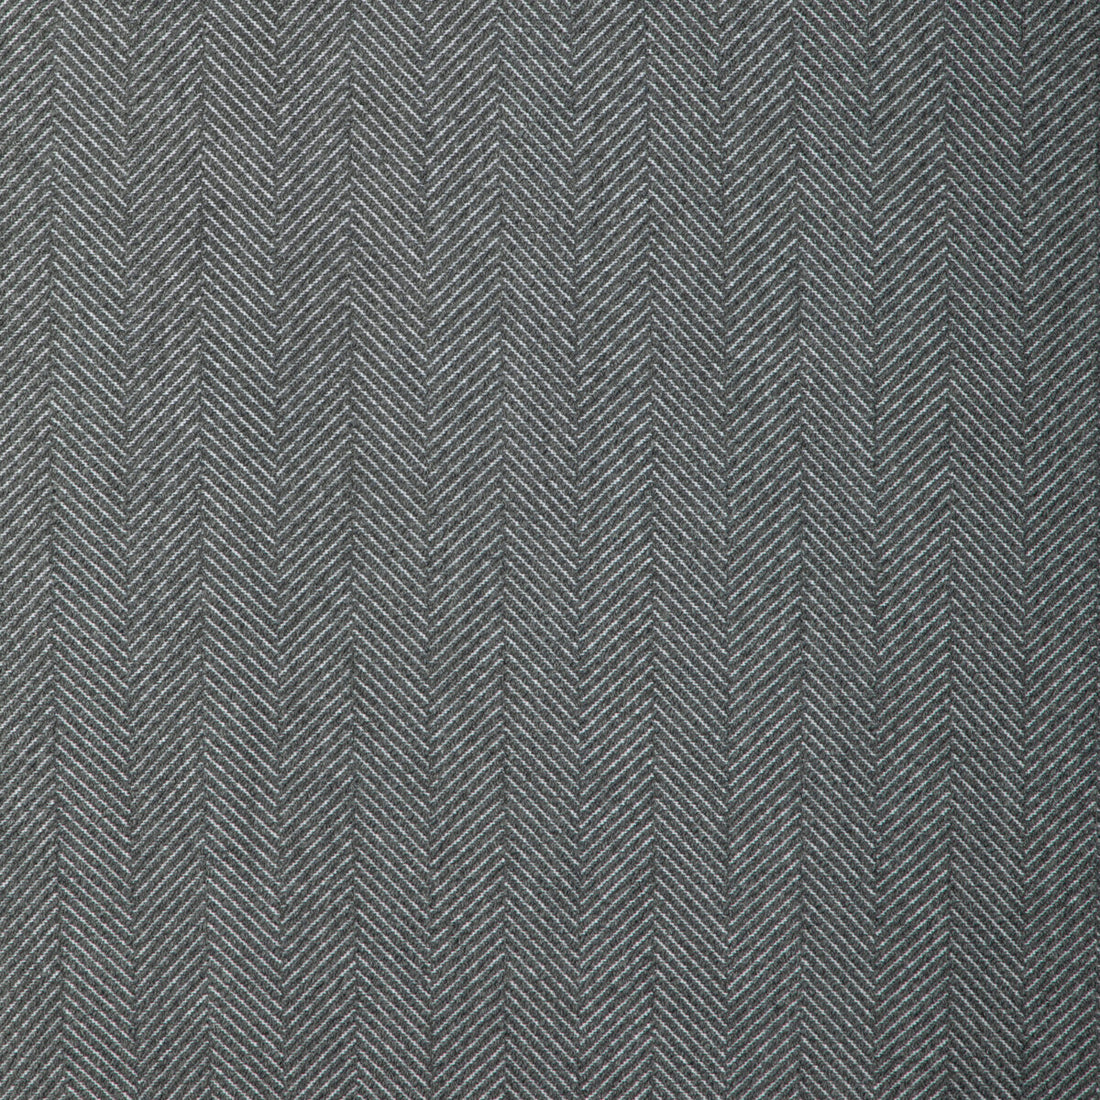 Kravet Design fabric in 36770-11 color - pattern 36770.11.0 - by Kravet Design in the Sea Island Indoor/Outdoor collection